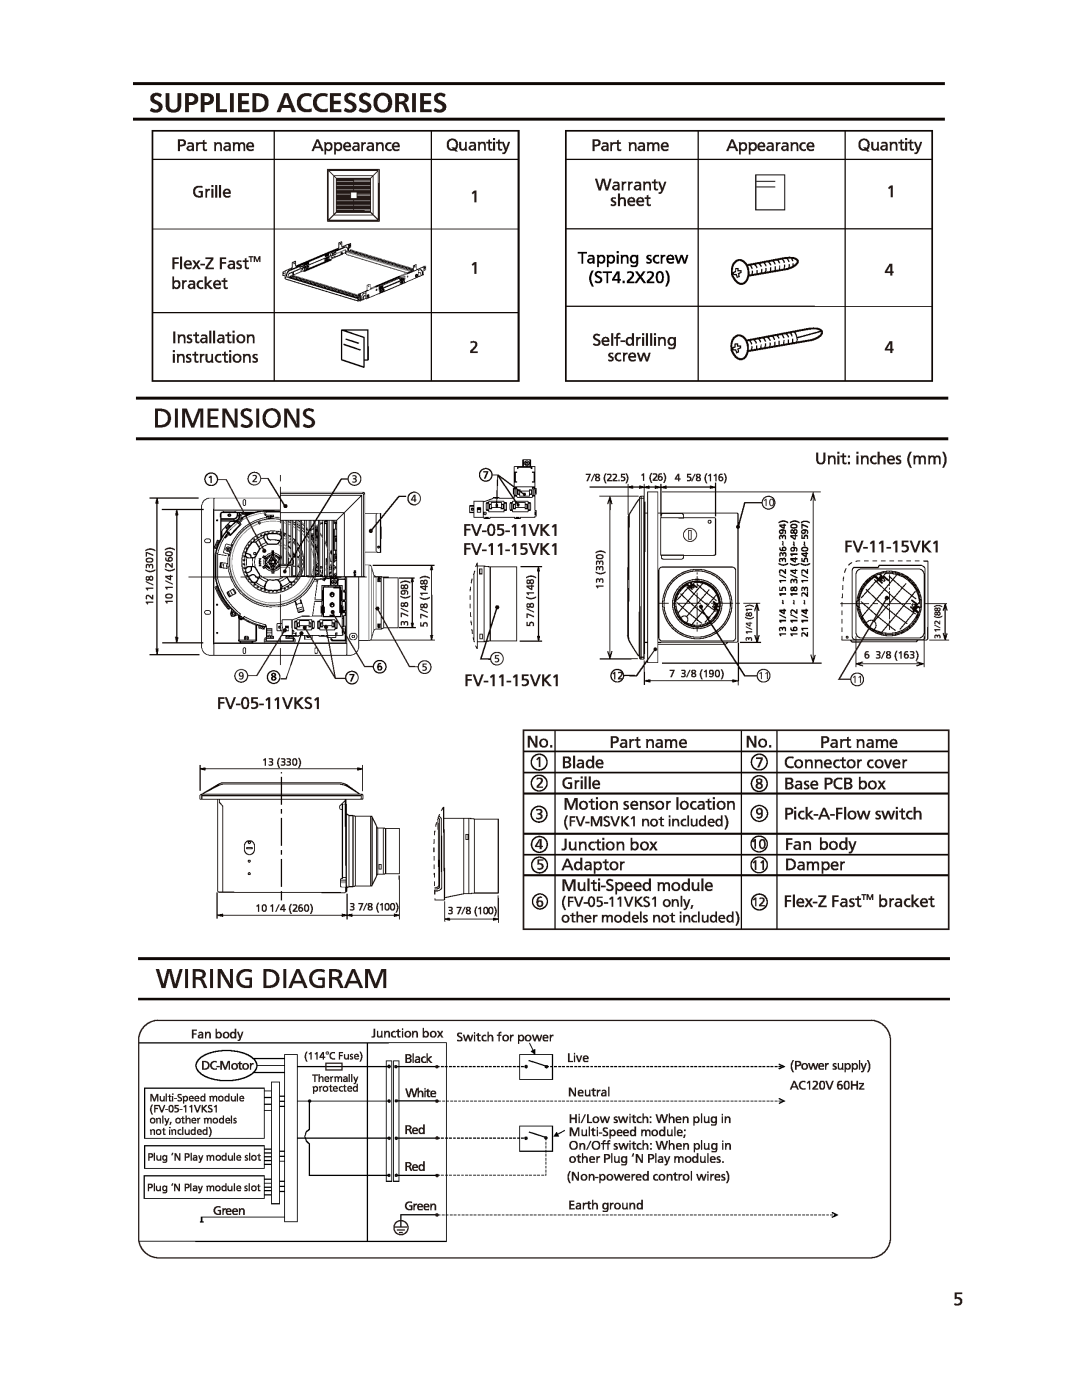 Panasonic FV-05-11VK1, FV-11-15VK1, FV-05-11VKS1 Supplied Accessories, Dimensions, Wiring Diagram, Tapping screw, ST4.2X20 